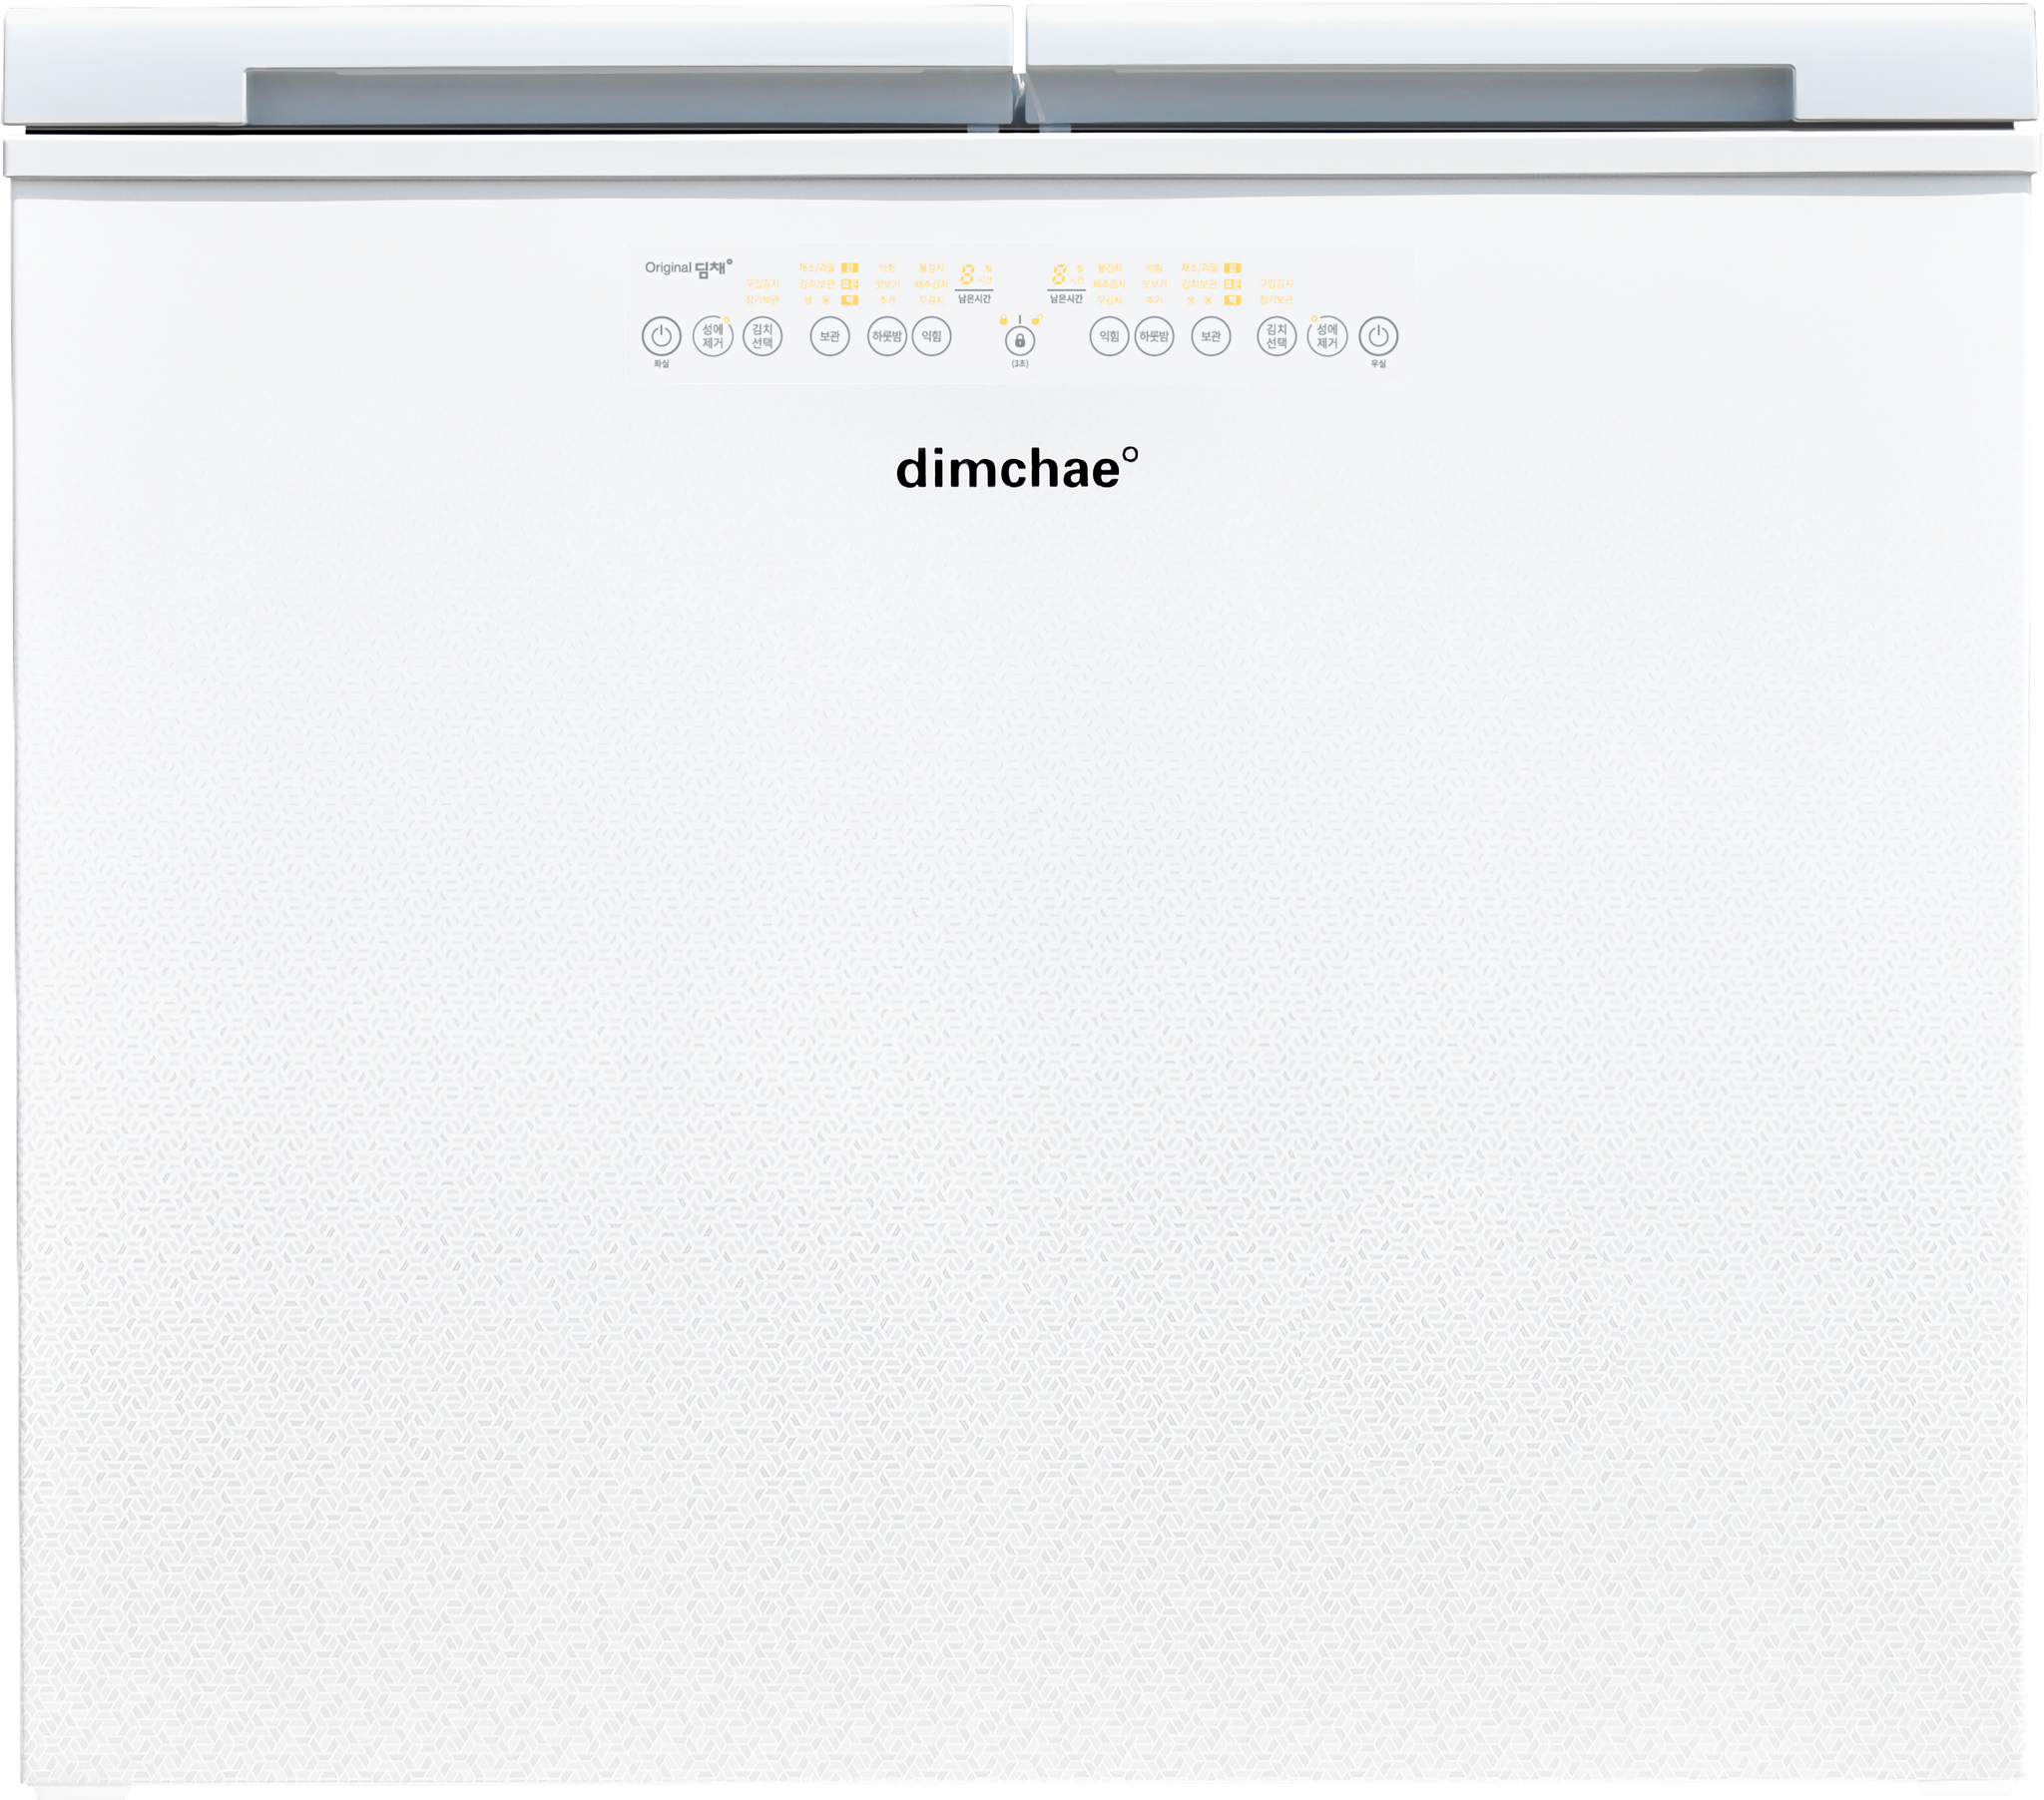 DL18EMAW by Dimchae - Dimchae Kimchi Refrigerator 180L (6.35 cu. ft.)  DL18-EMAW / Alice White